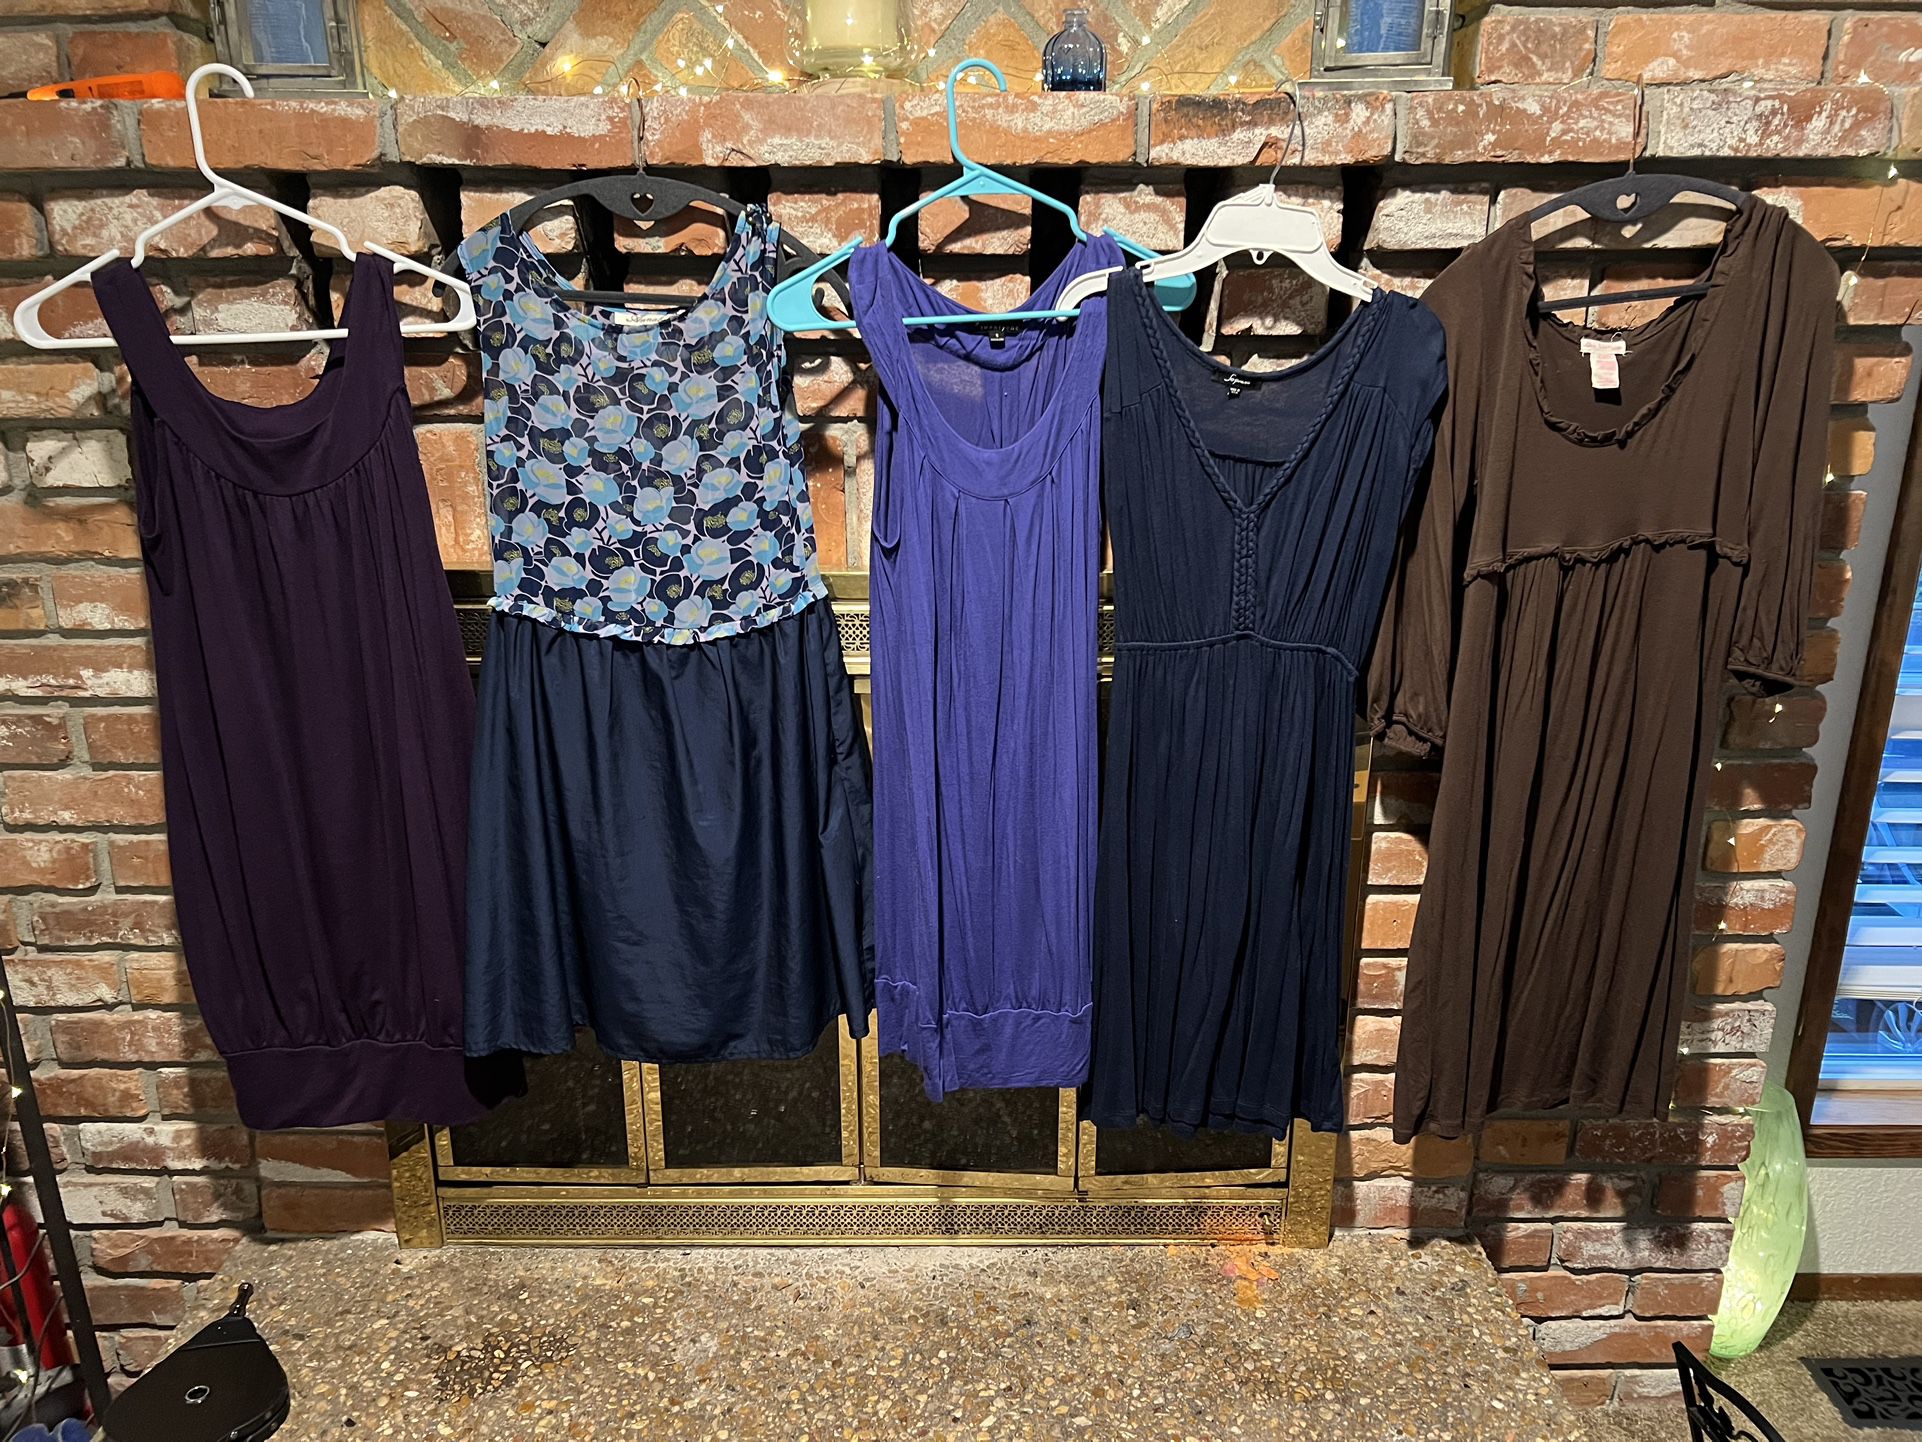 Lot of 15 Dresses & 1 Romper (size small/medium)